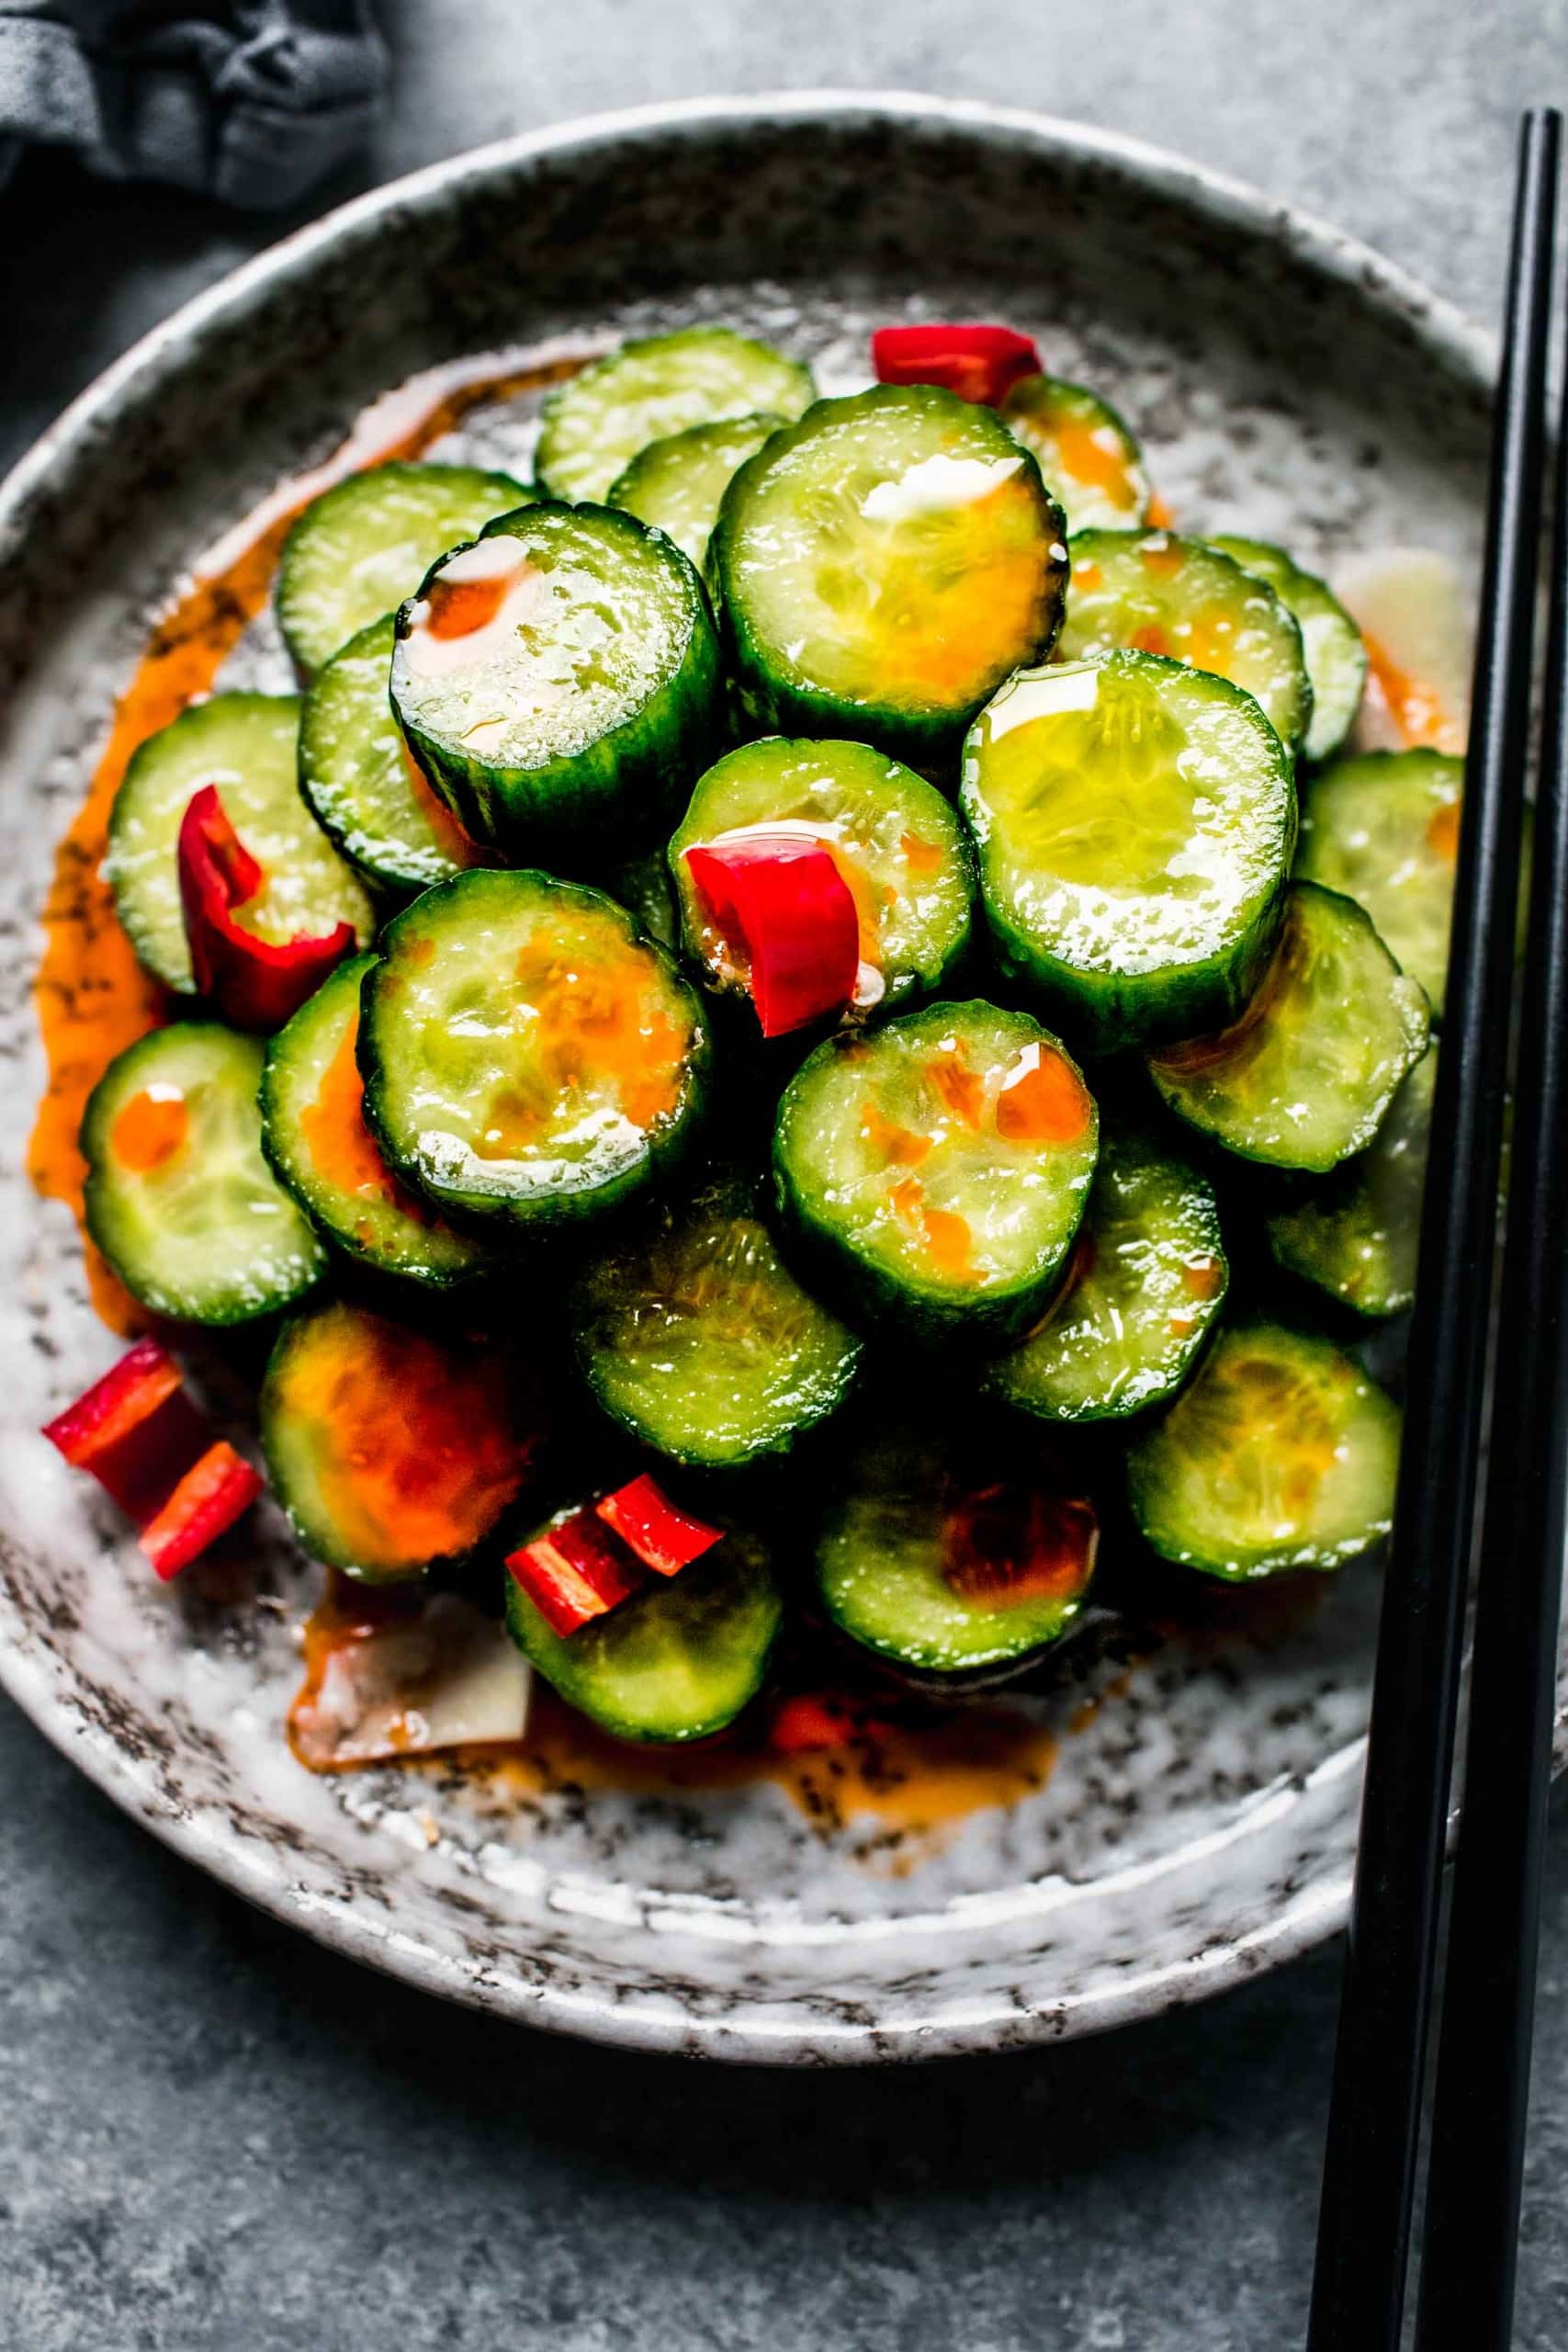 How To Make Cucumber Salad Din Tai Fung